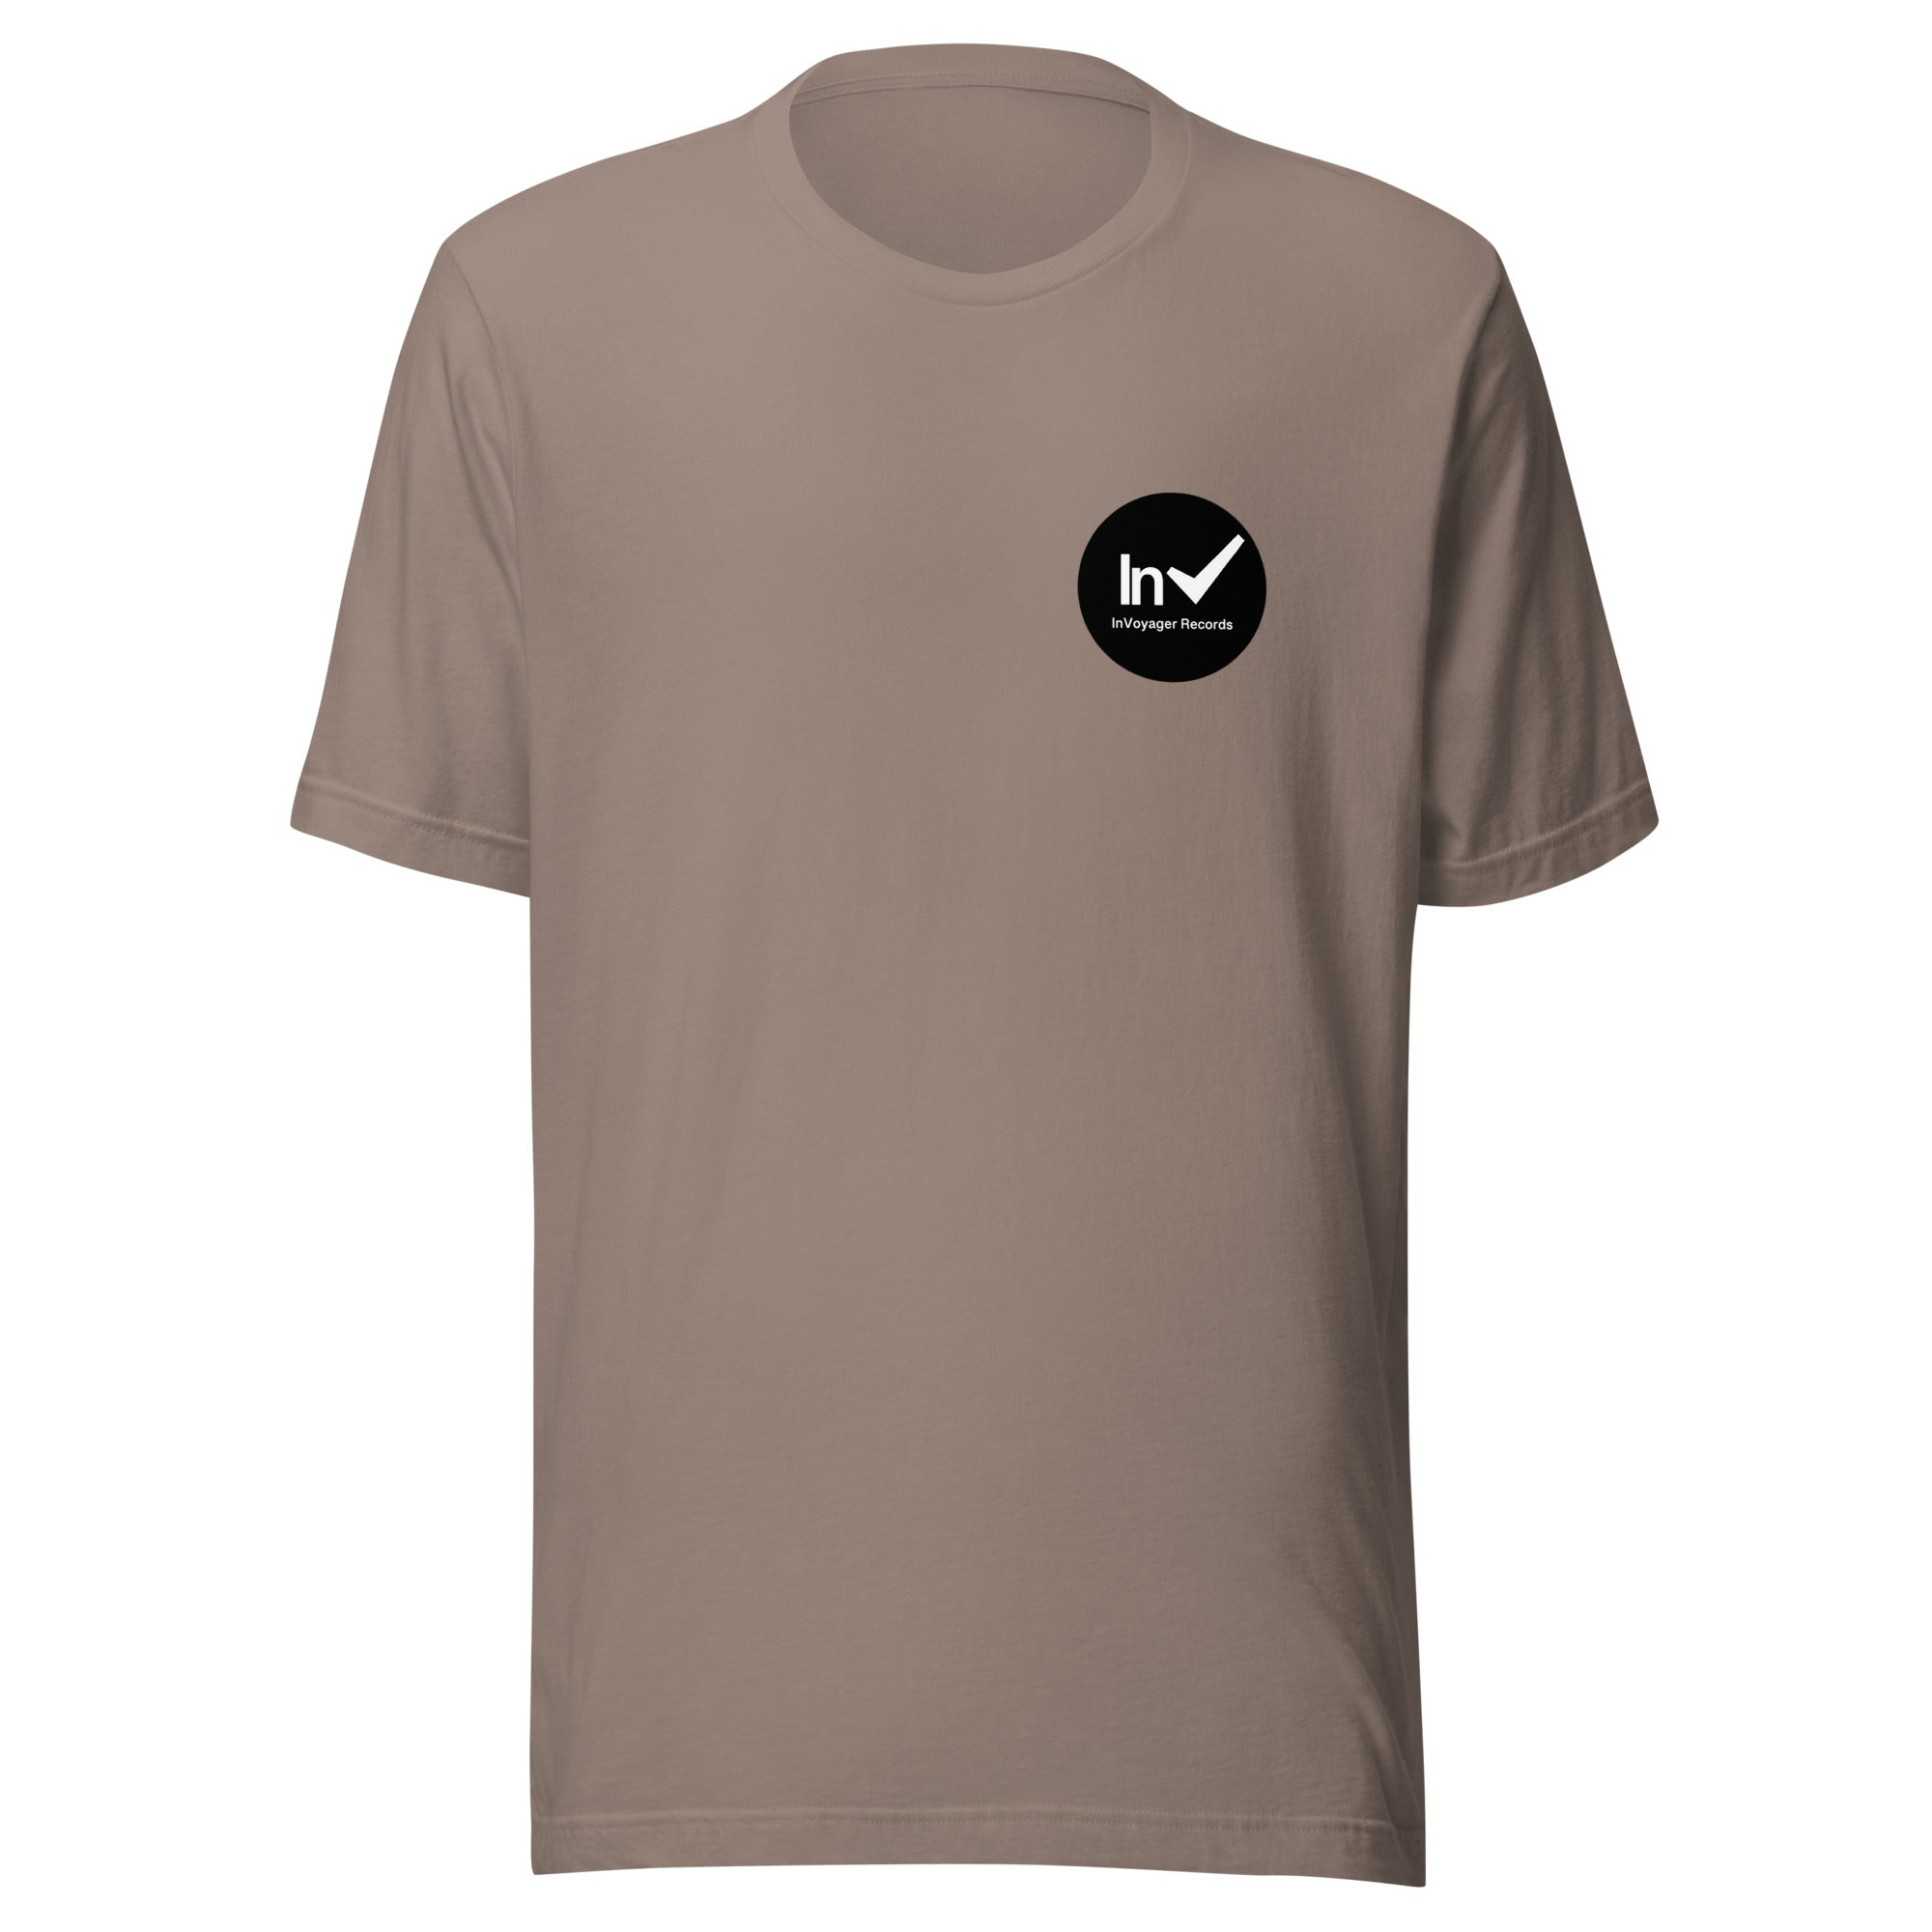 DAMIAN LEMAR HUDSON - Unisex t-shirt